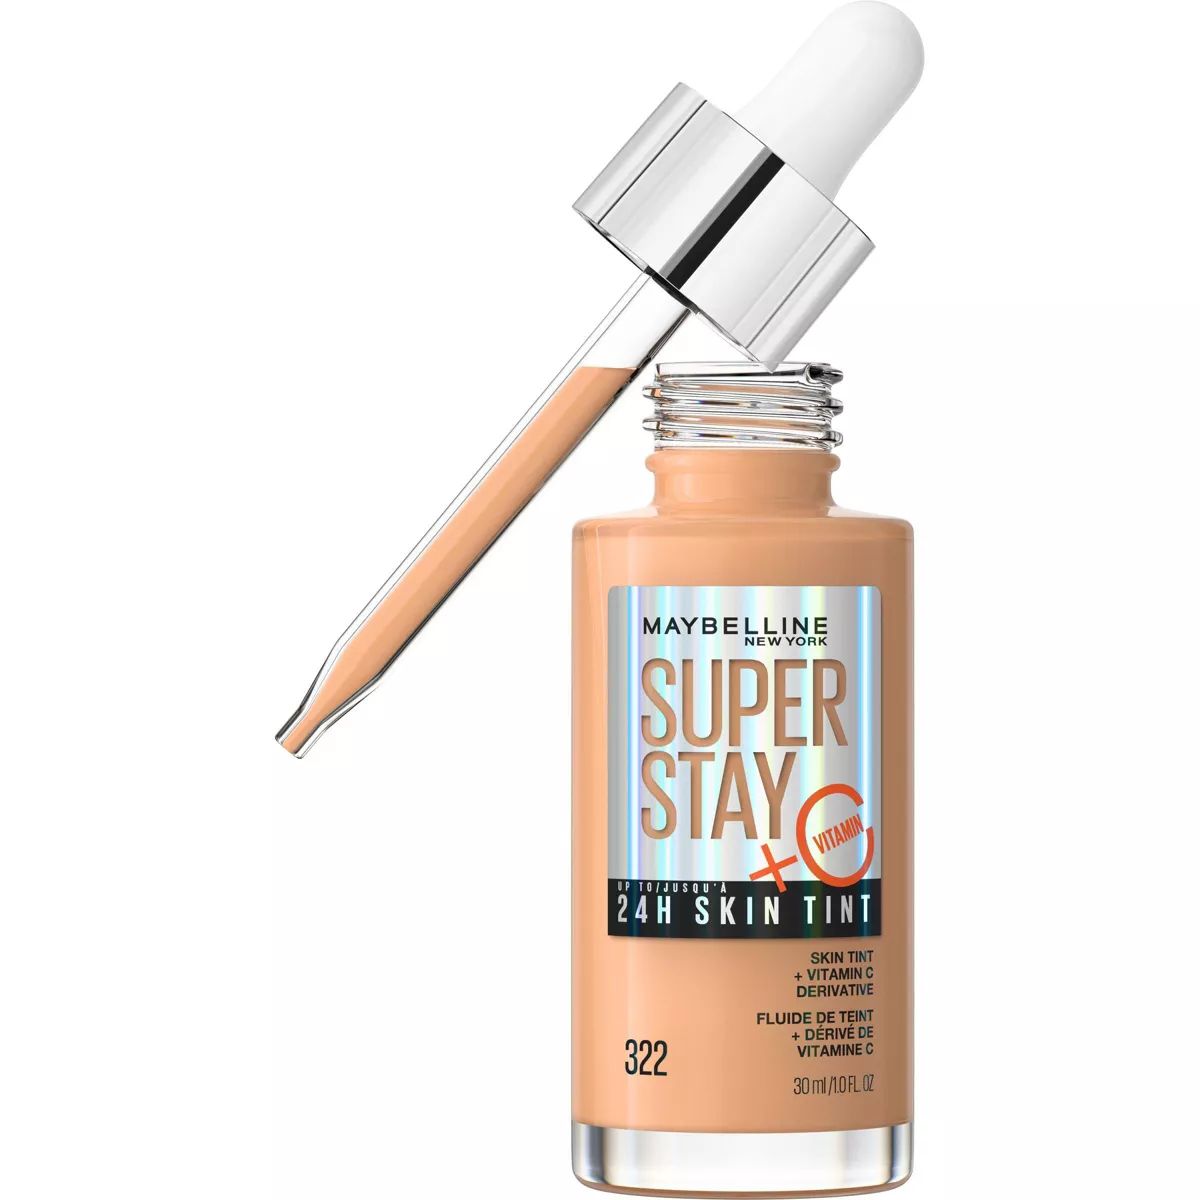 Maybelline Super Stay 24HR Skin Tint Foundation with Vitamin C - 1 fl oz | Target